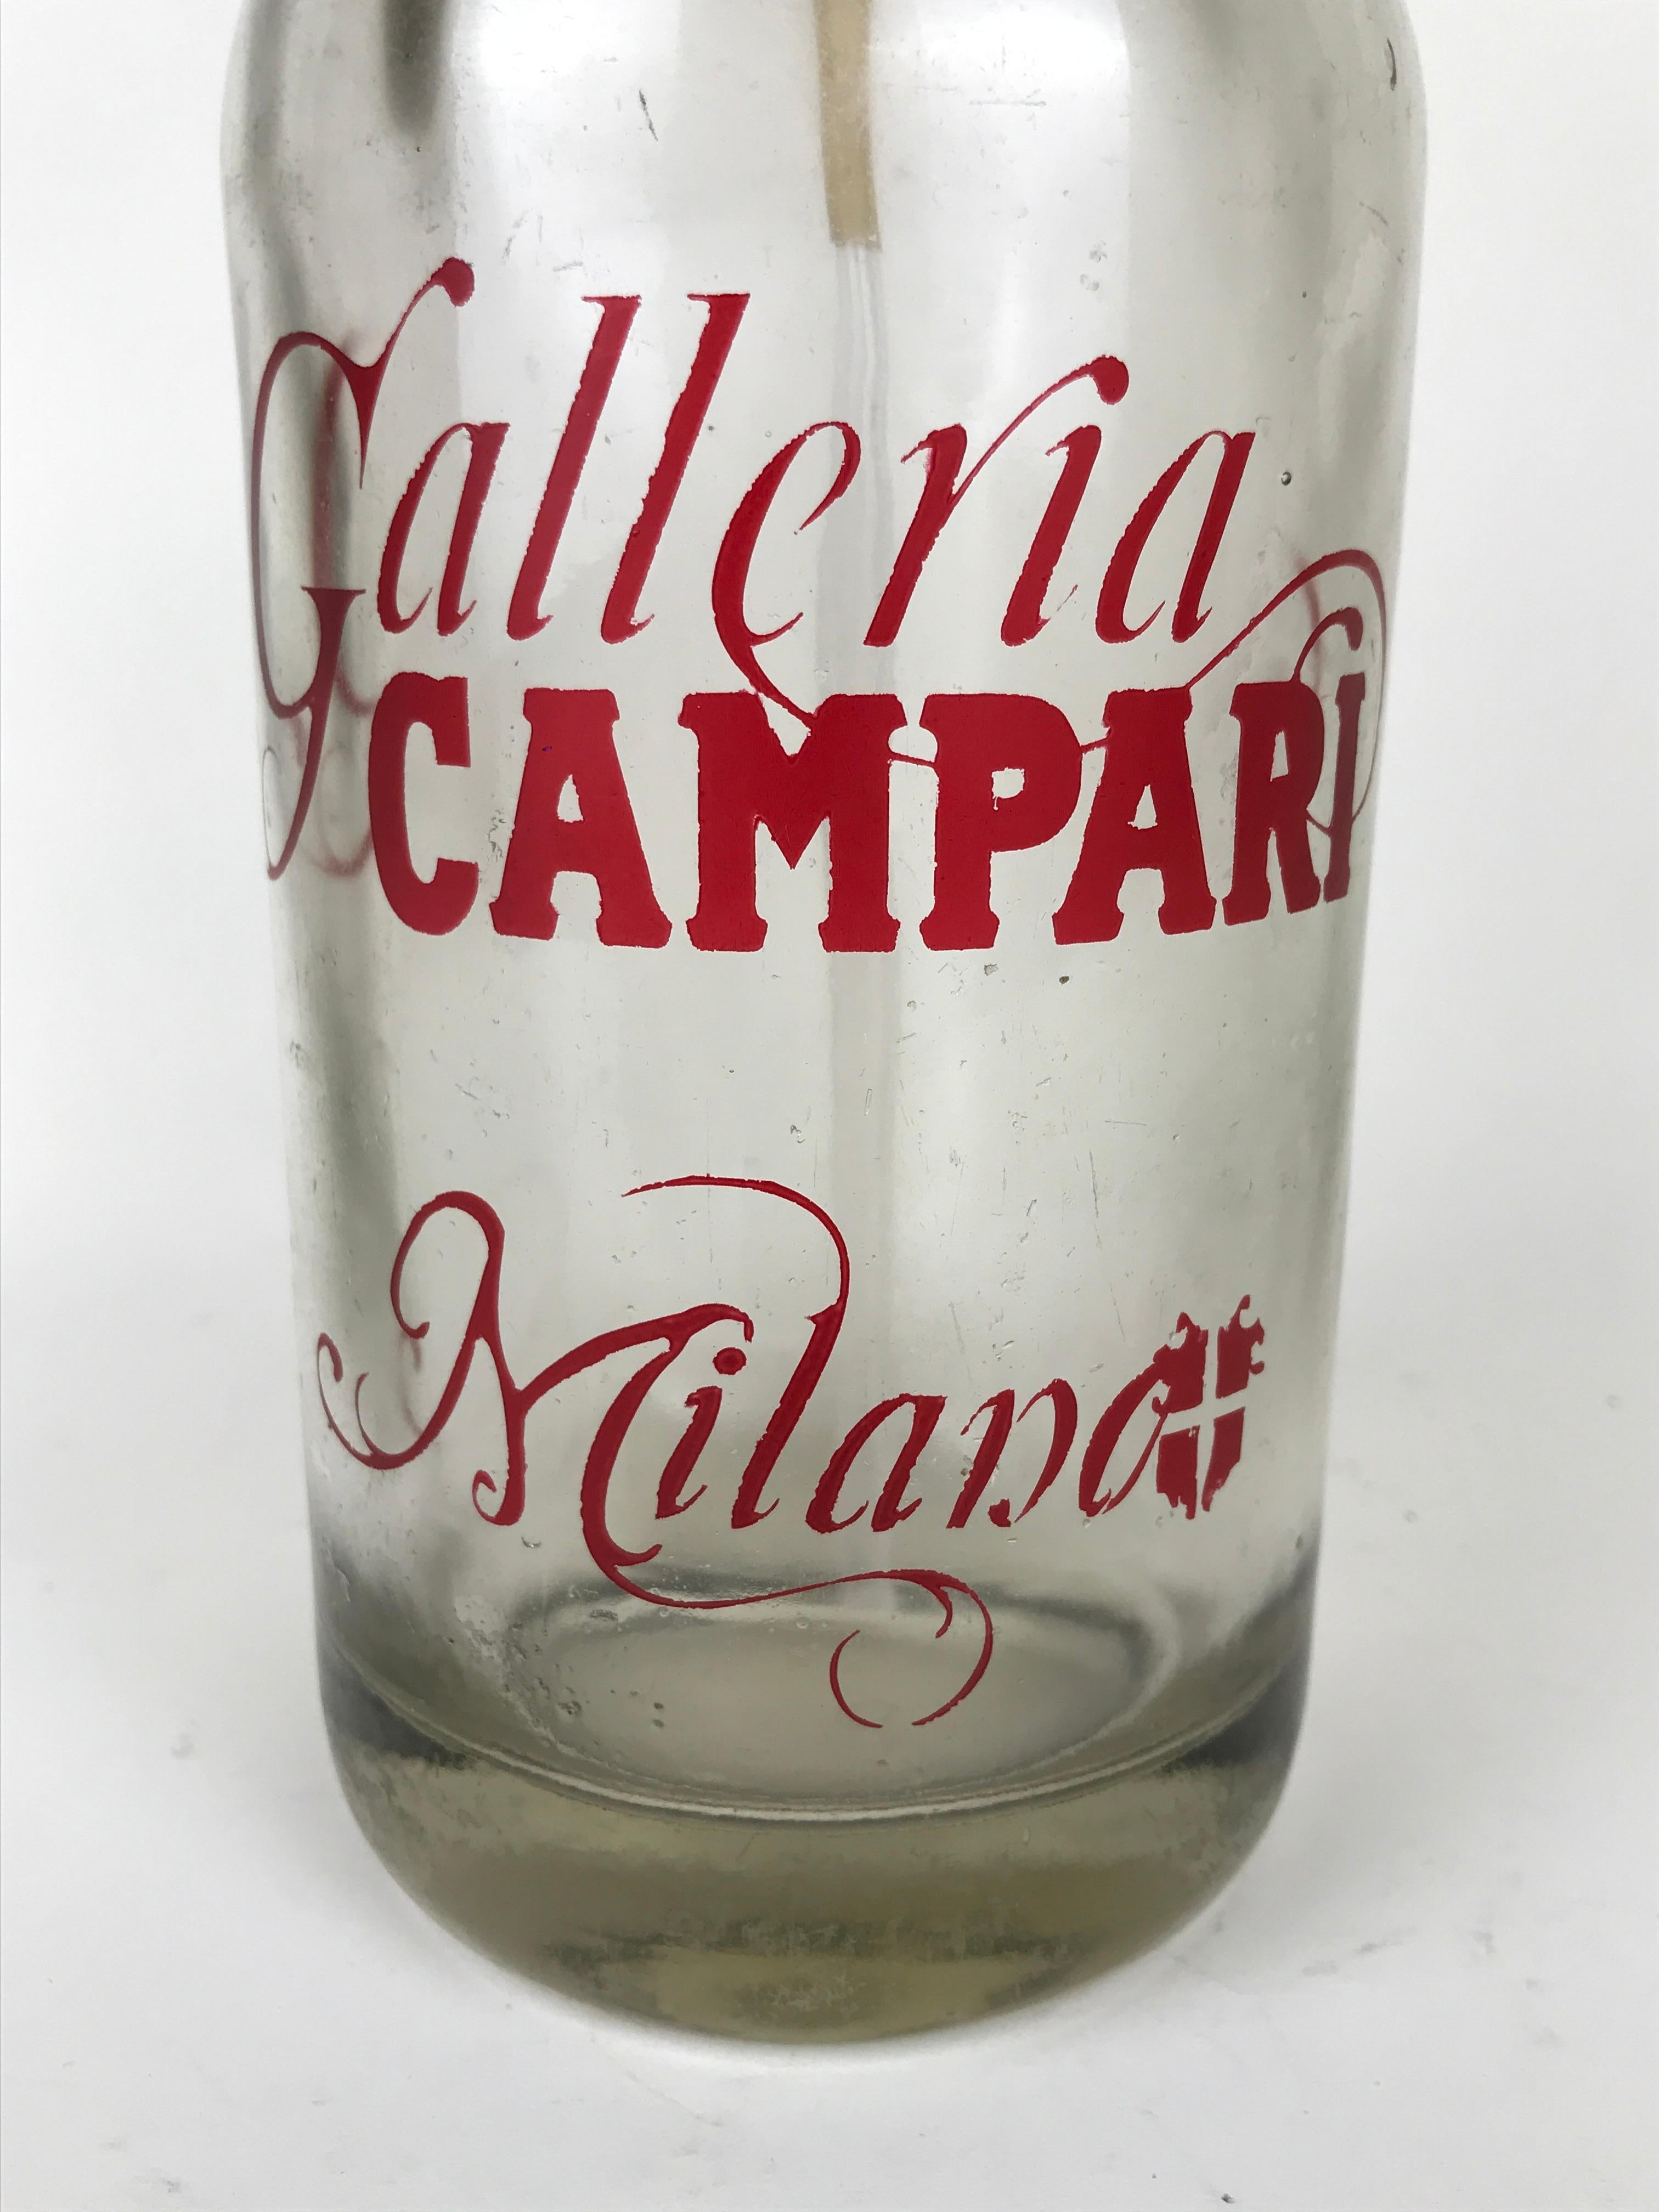 1950s Vintage Glass Soda Syphon Advertising Seltzer Galleria Campari Milano 1